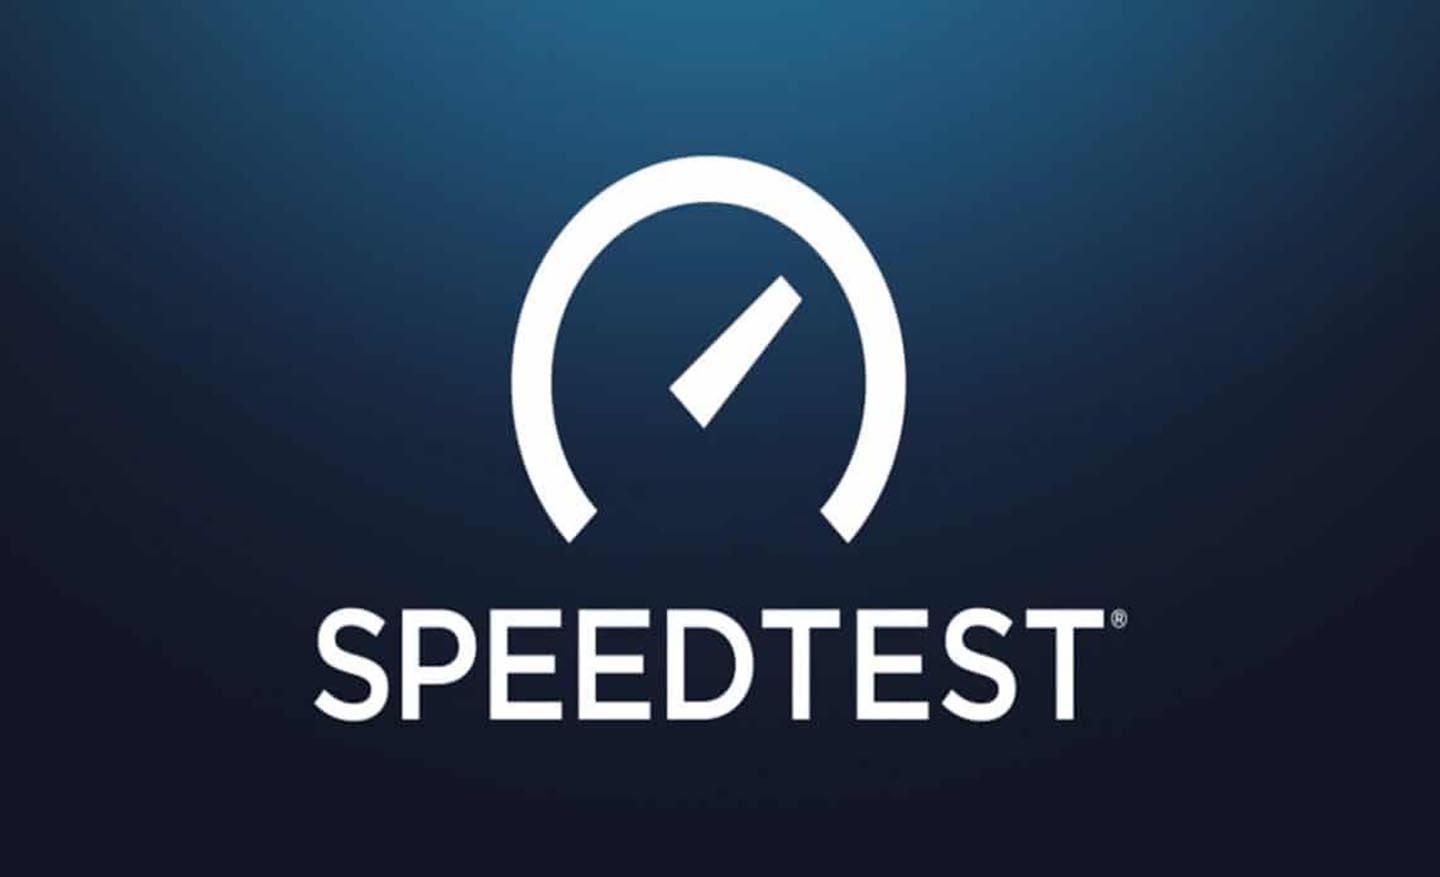 ookla speed test app for windows